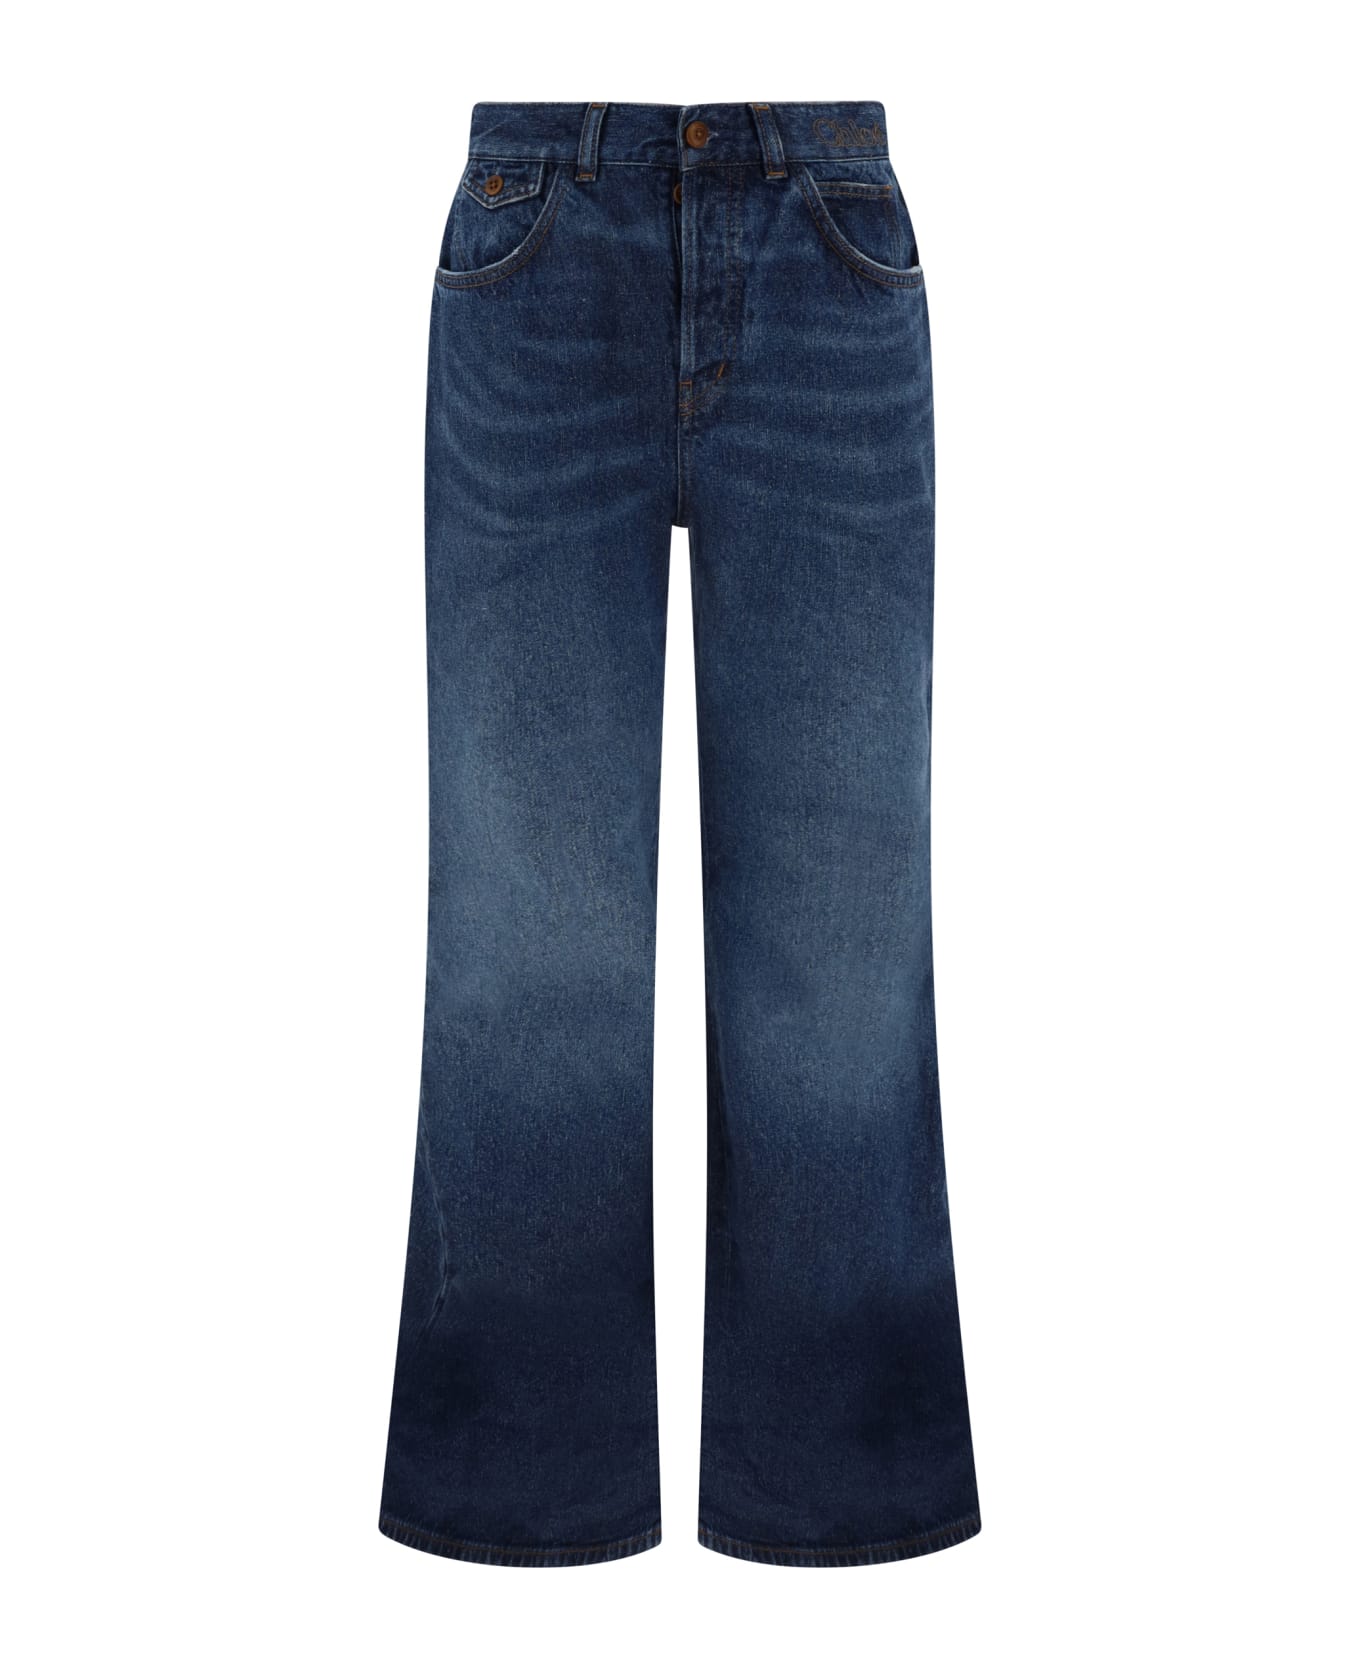 Chloé Chloè Merapi Cotton Denim Jeans - Faded Denim